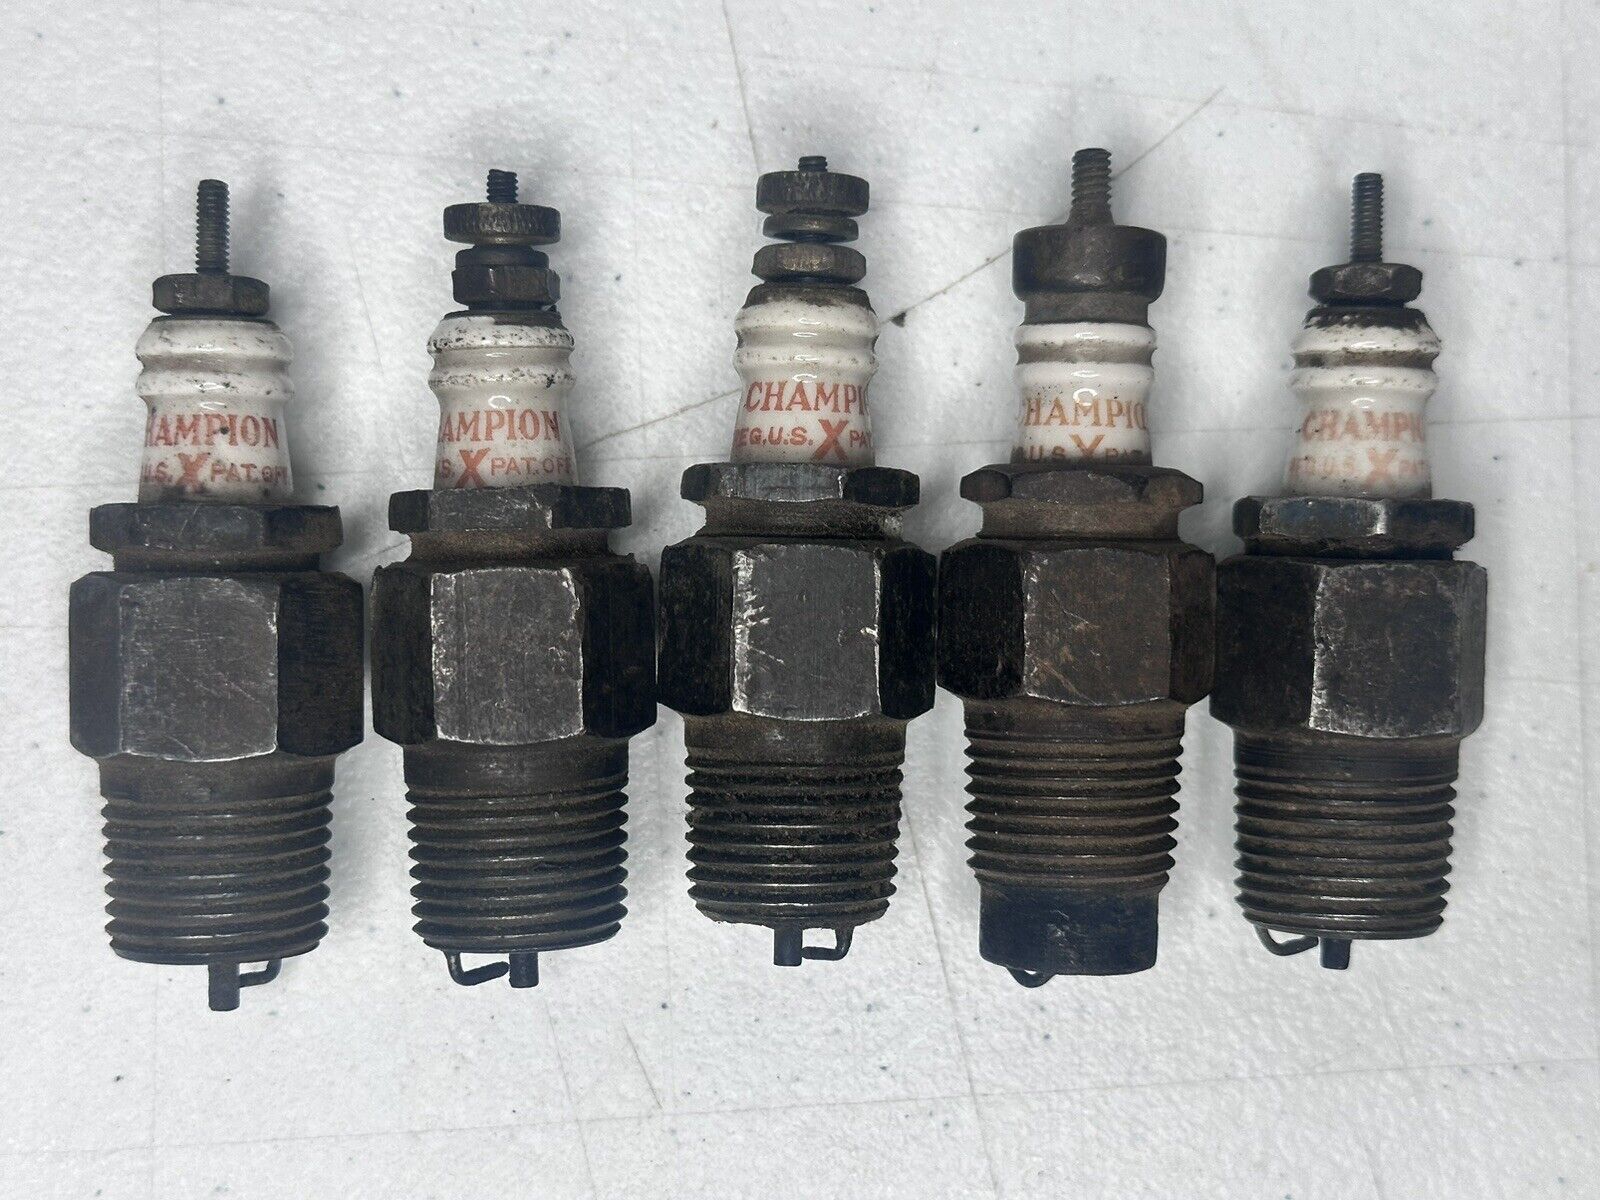 Vintage Champion X Spark Plugs Set of 5 - Antique Ford Auto Parts Collectible